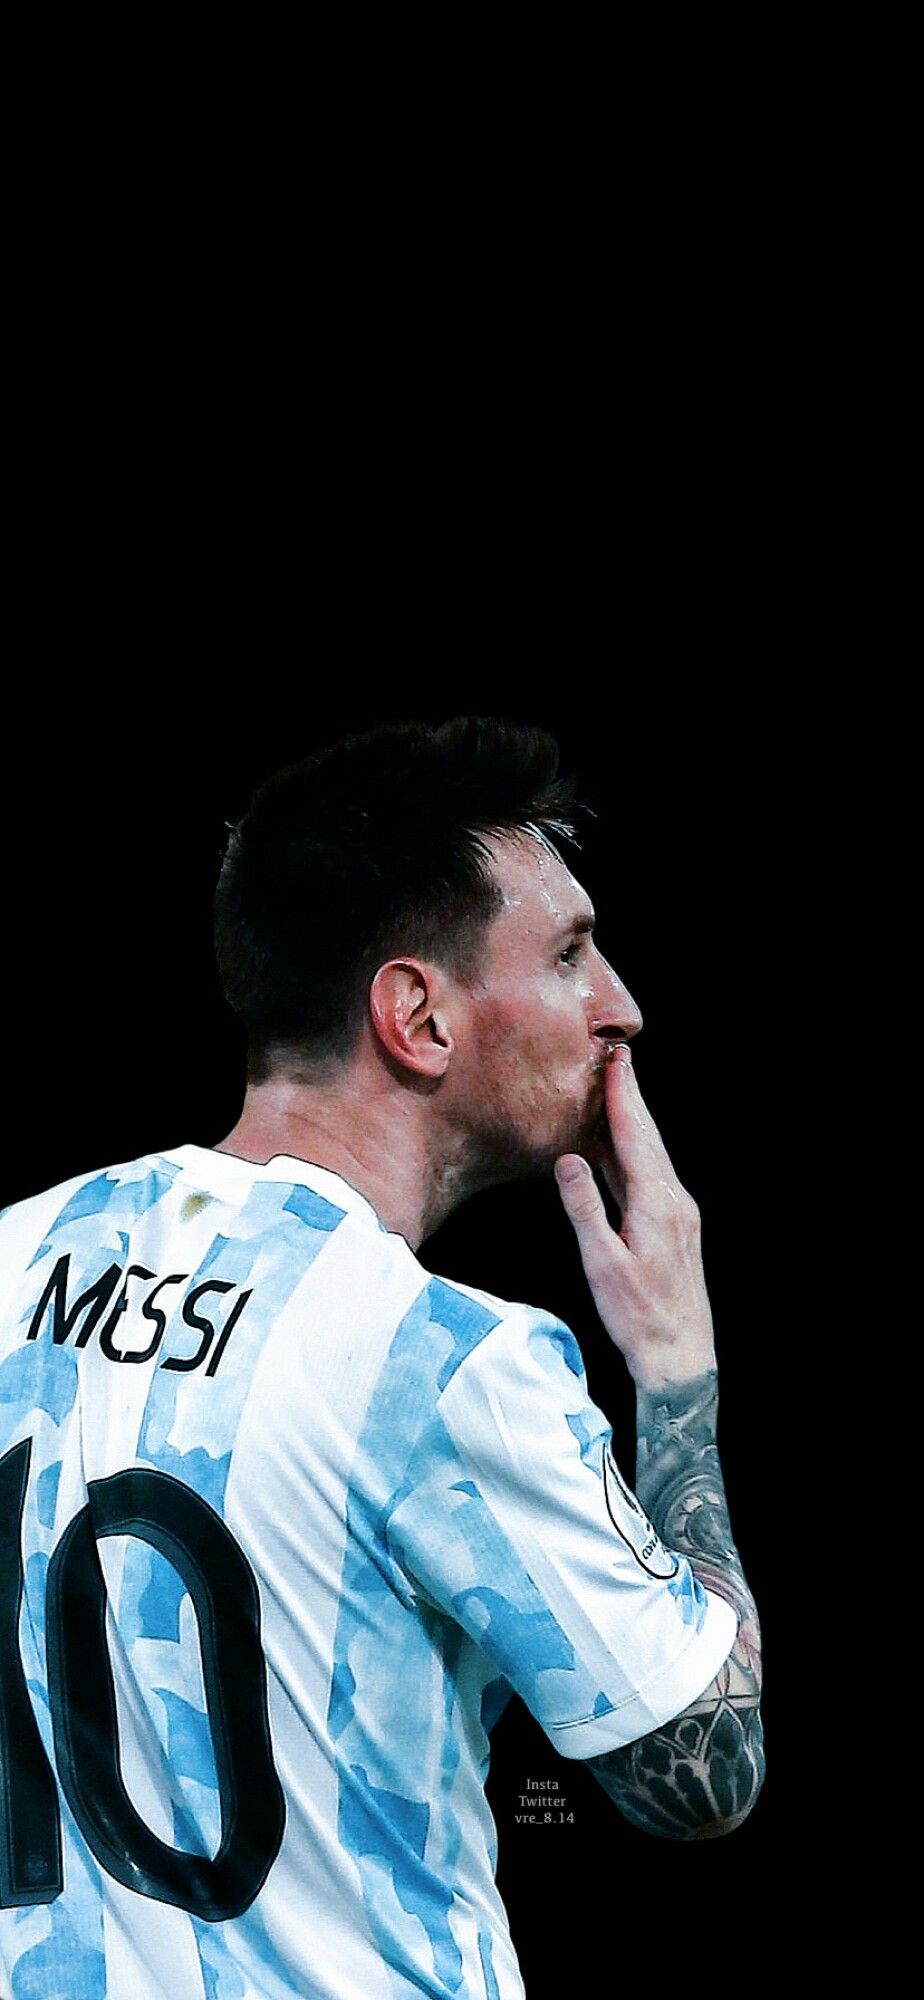 Lionel Messi Argentina Wallpapers